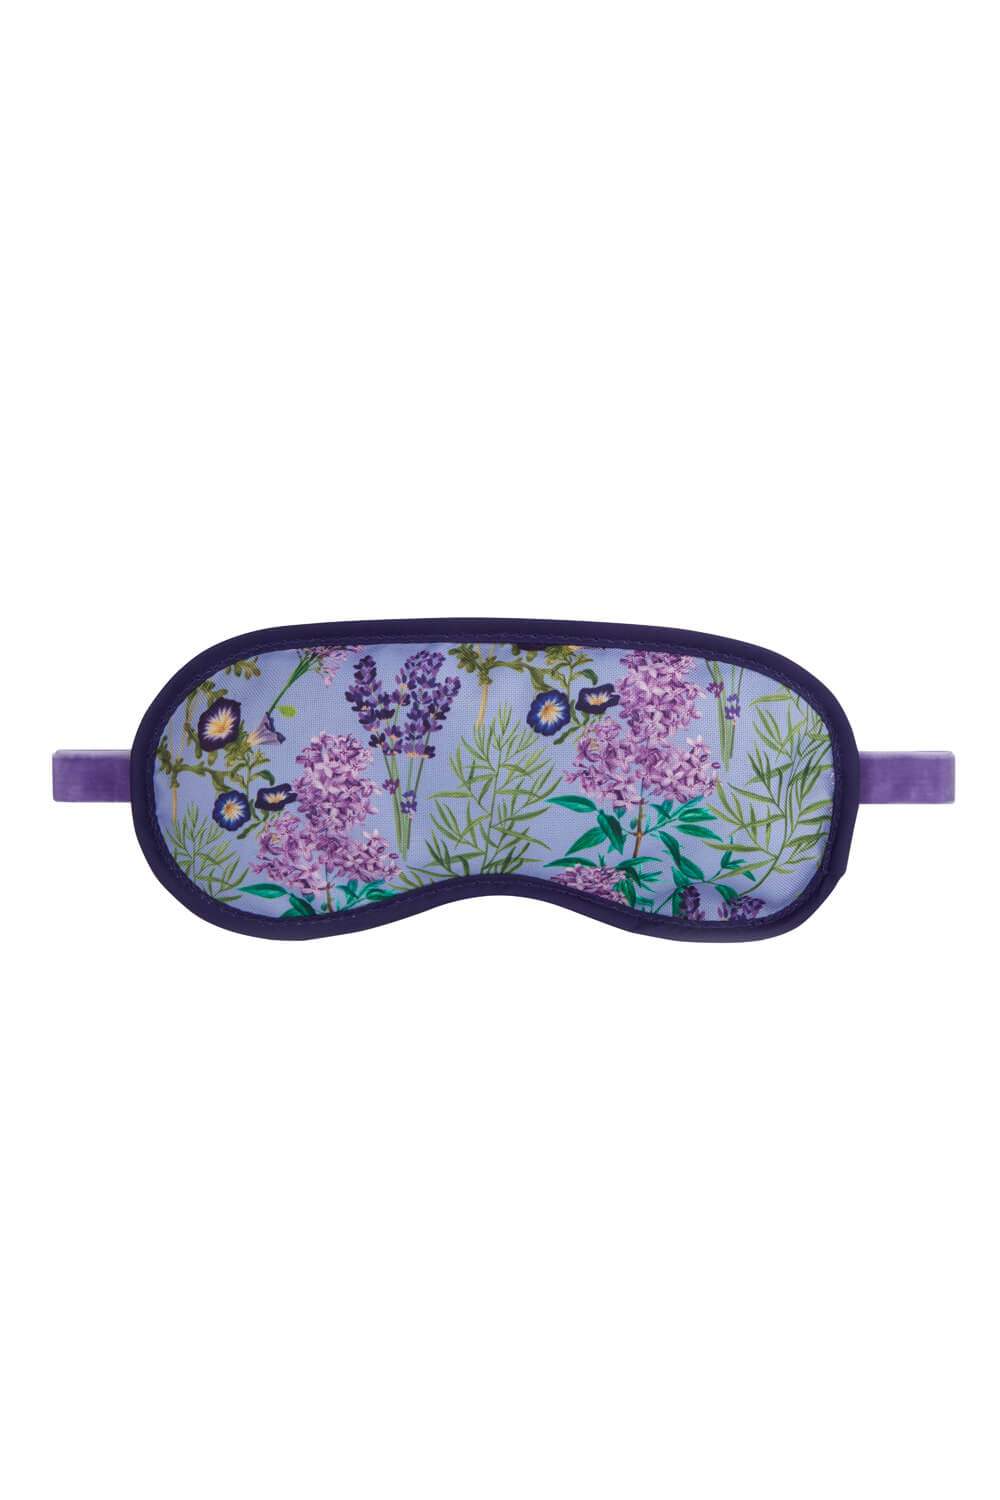 Heathcote & Ivory Lavender Garden Sleep Well Eye Mask